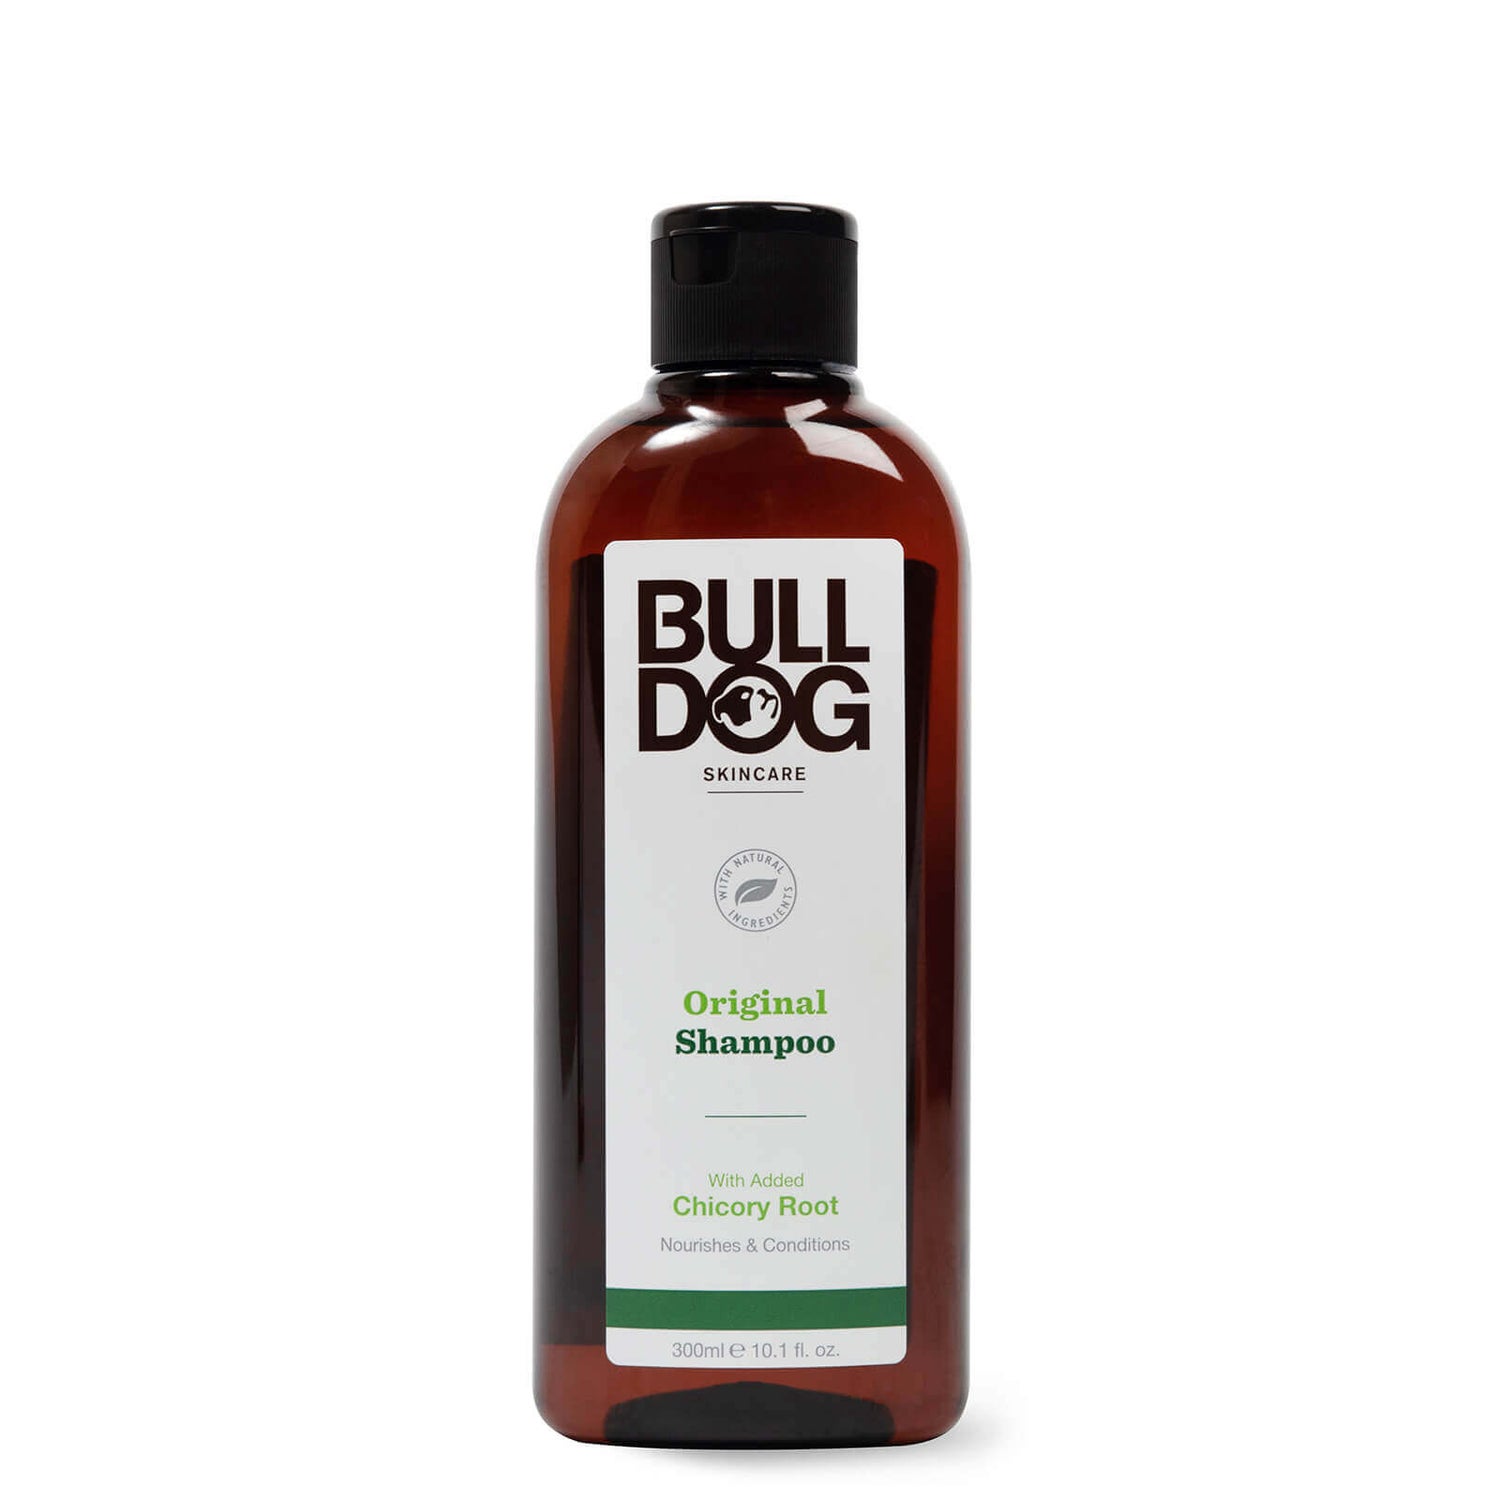 Bulldog Original Shampoo 300ml - Gratis Lieferservice weltweit